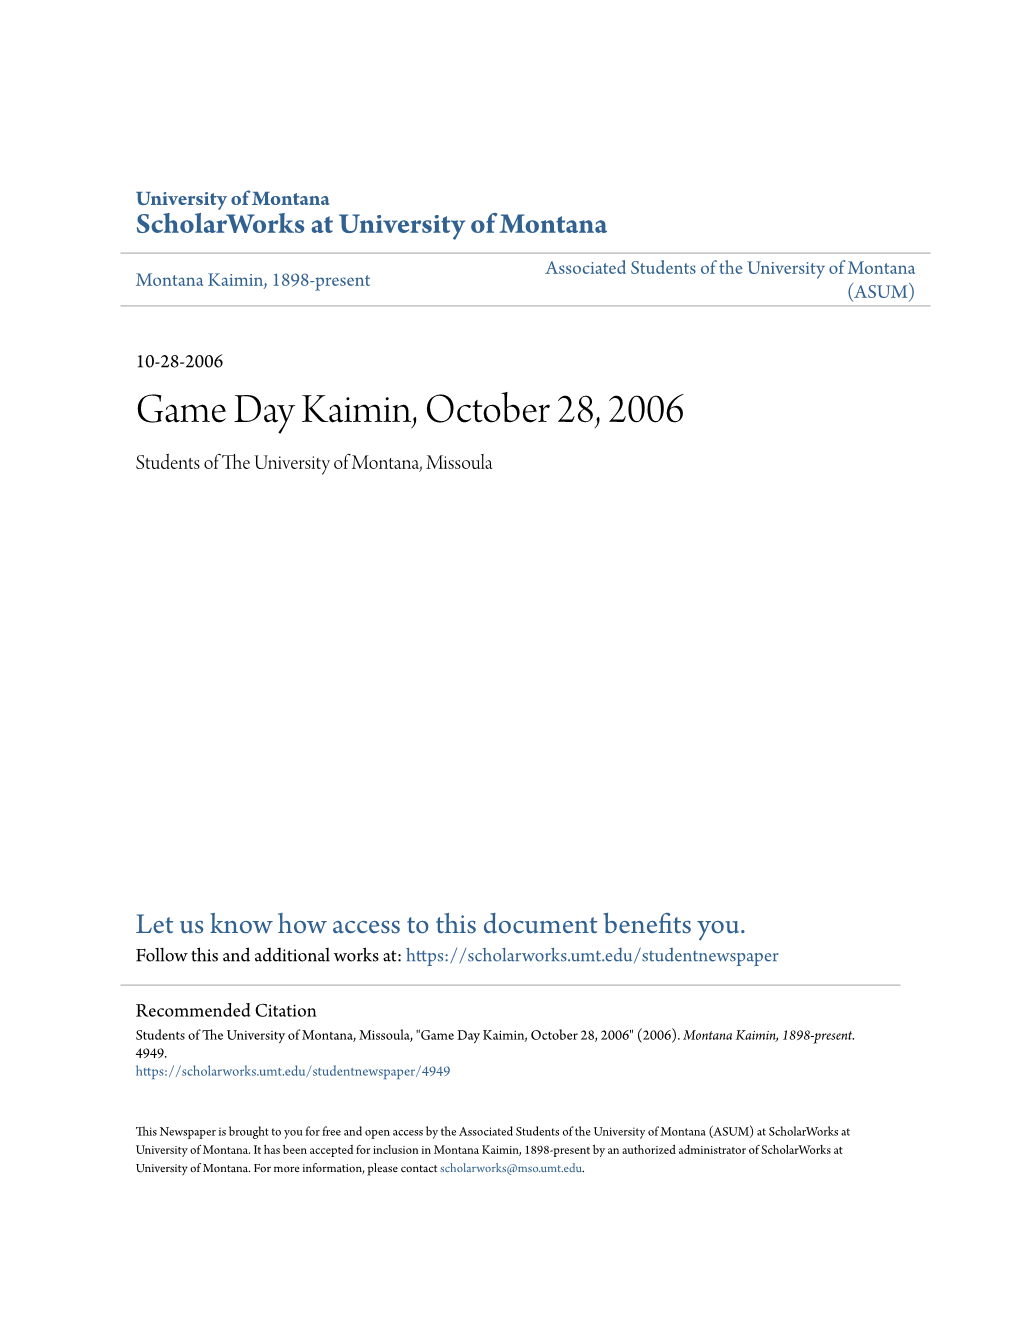 Game Day Kaimin, October 28, 2006 Students of the Niu Versity of Montana, Missoula